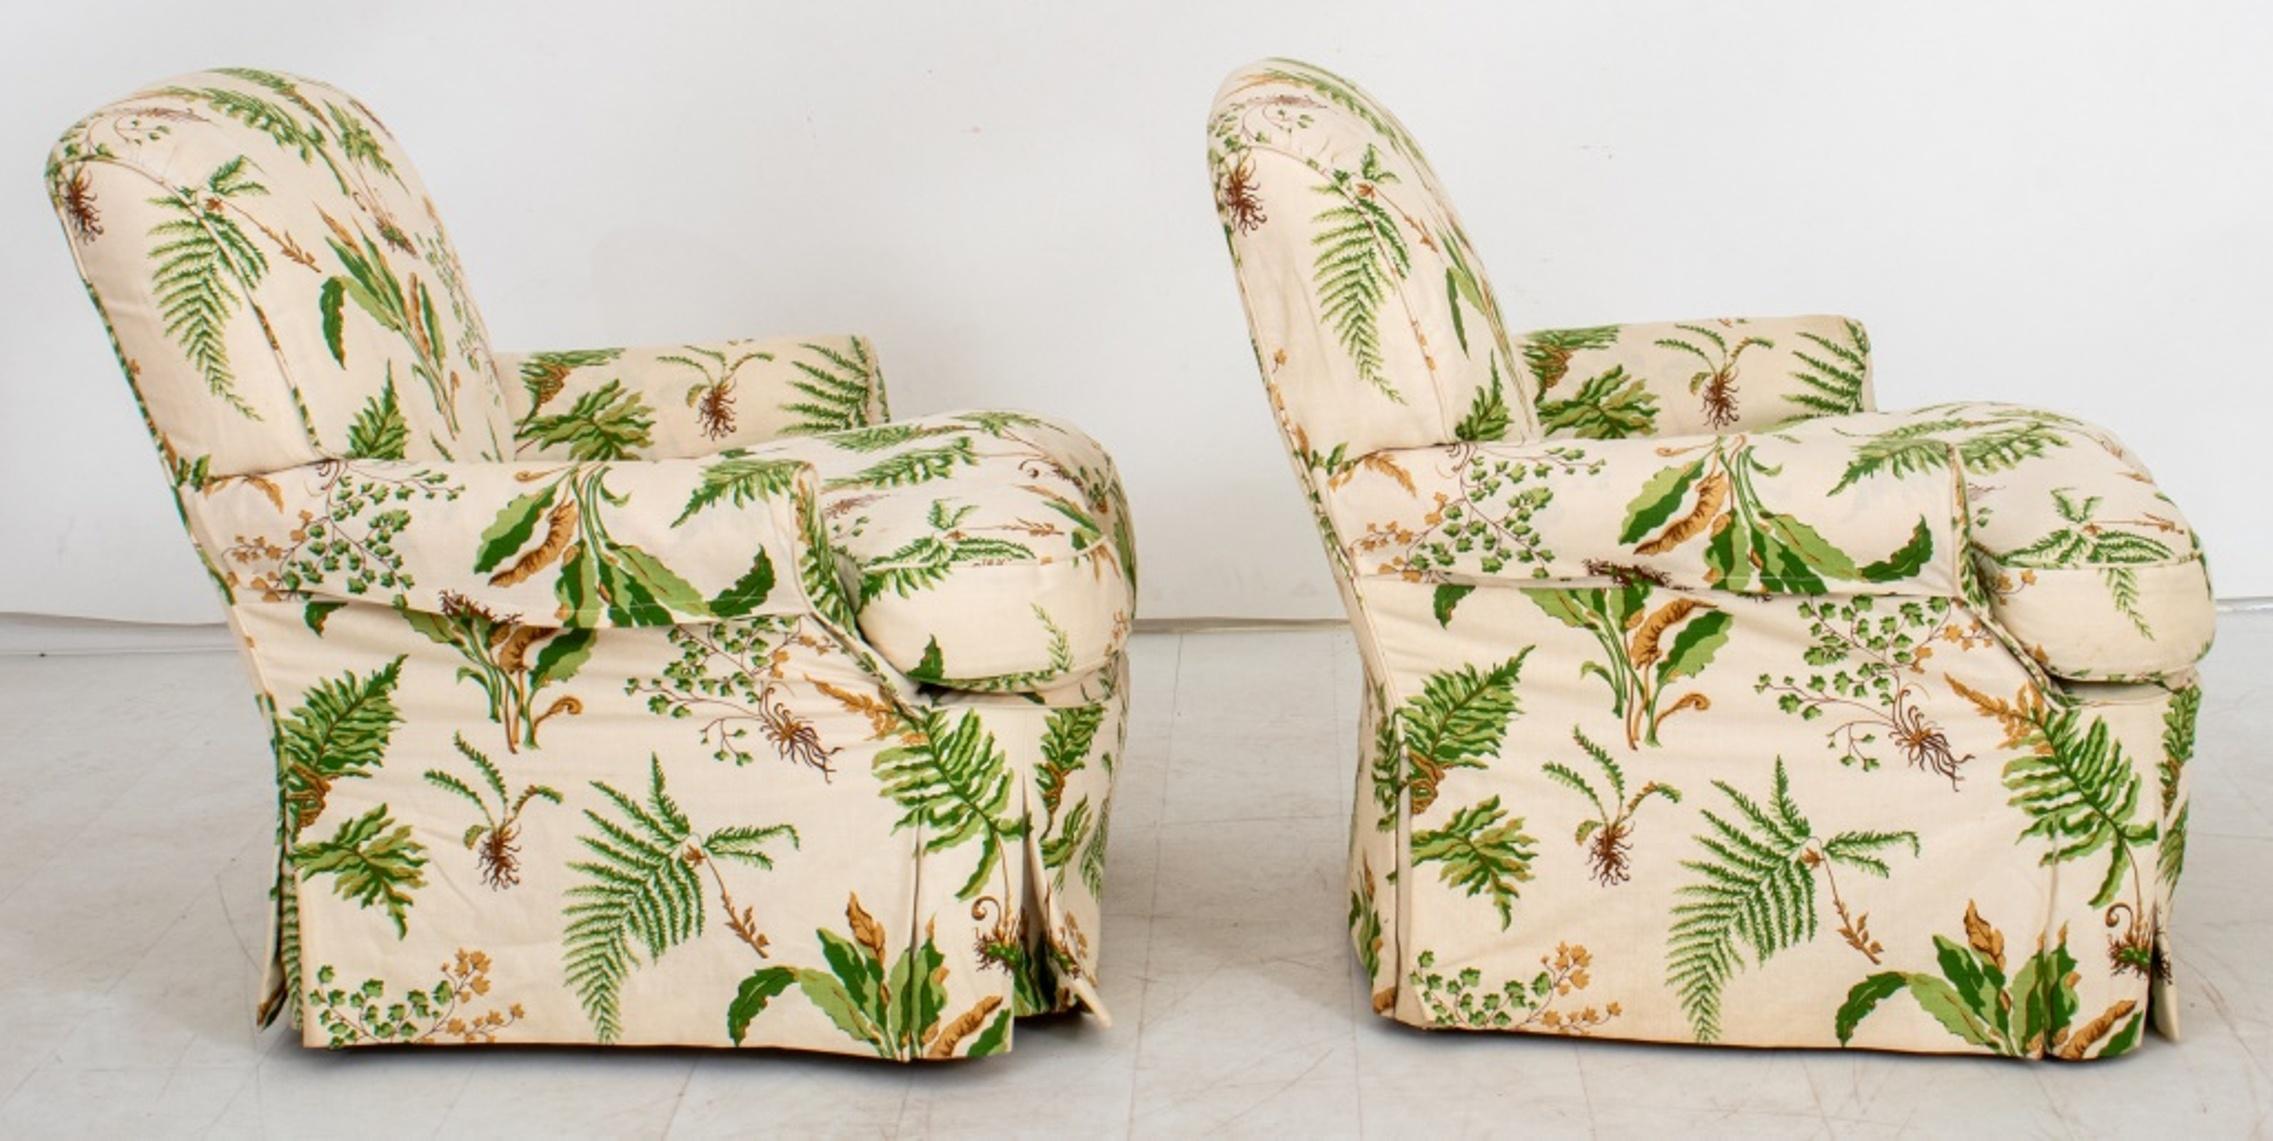 Club Chairs, Elsie de Wolfe Botanical Slipcovers 1